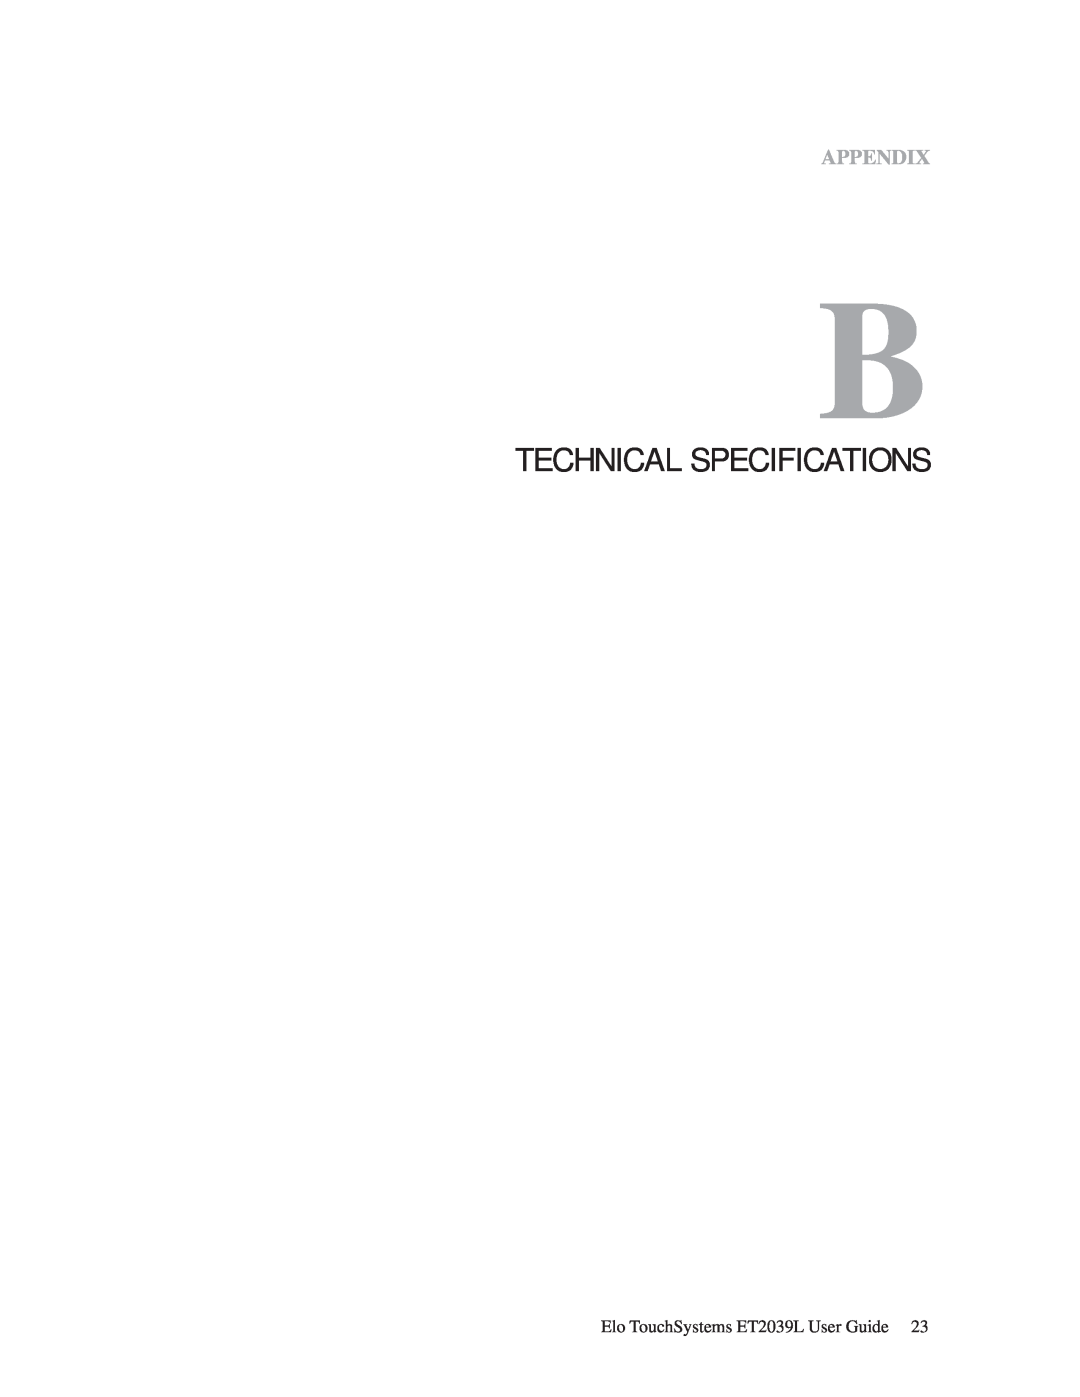 Elo TouchSystems ET2039L manual Technical Specifications, Appendix 